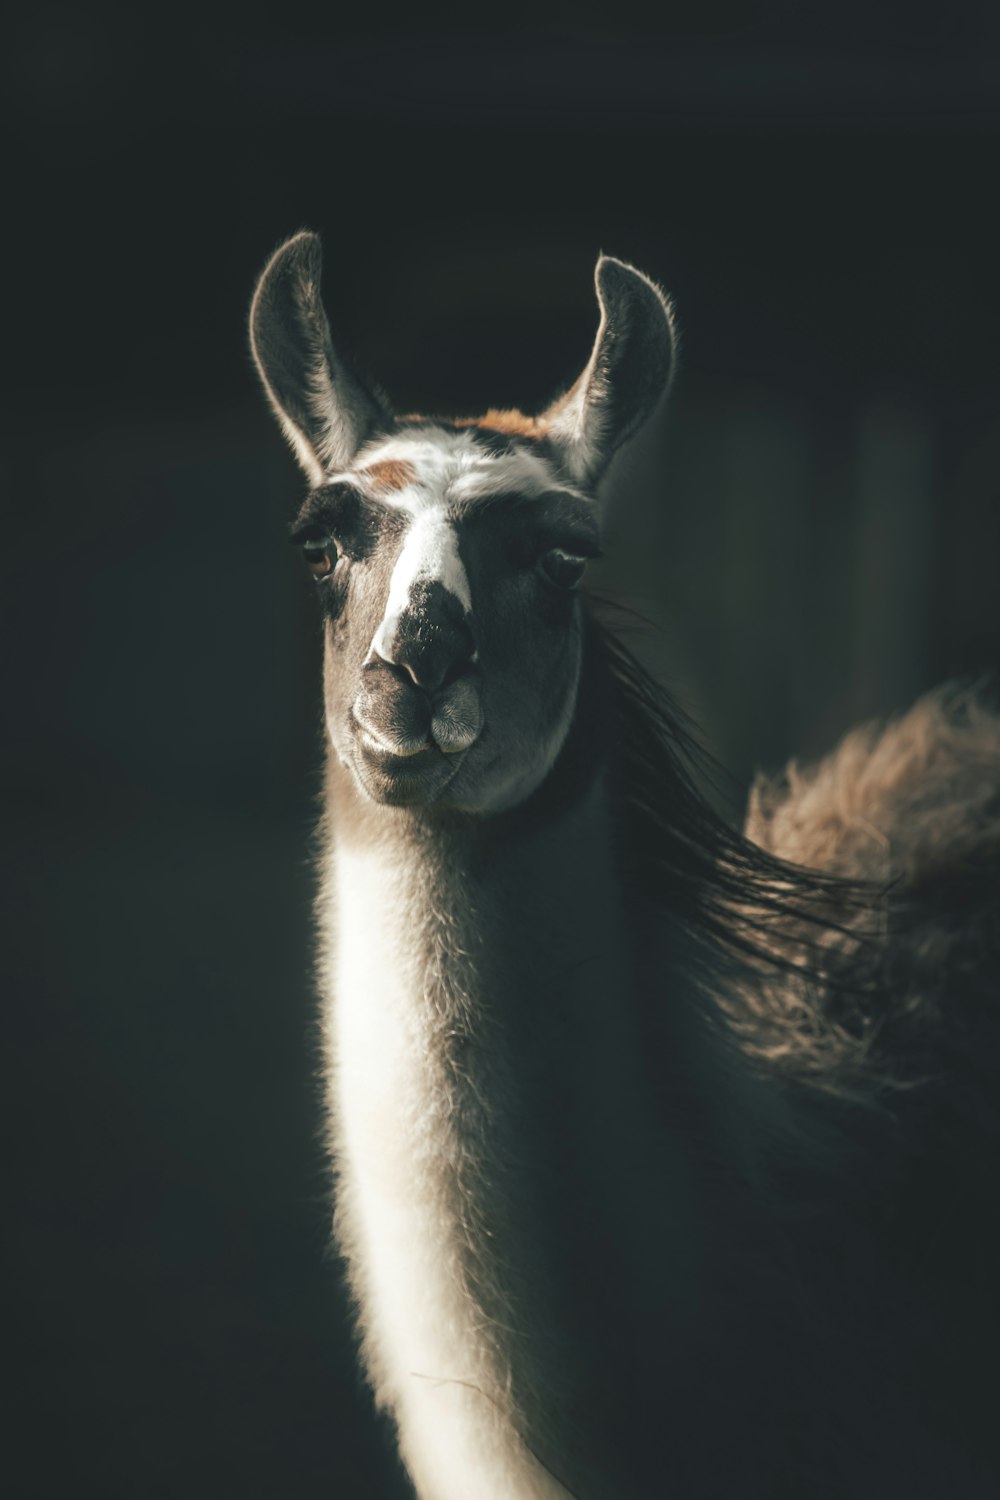 a close up of a llama with long hair